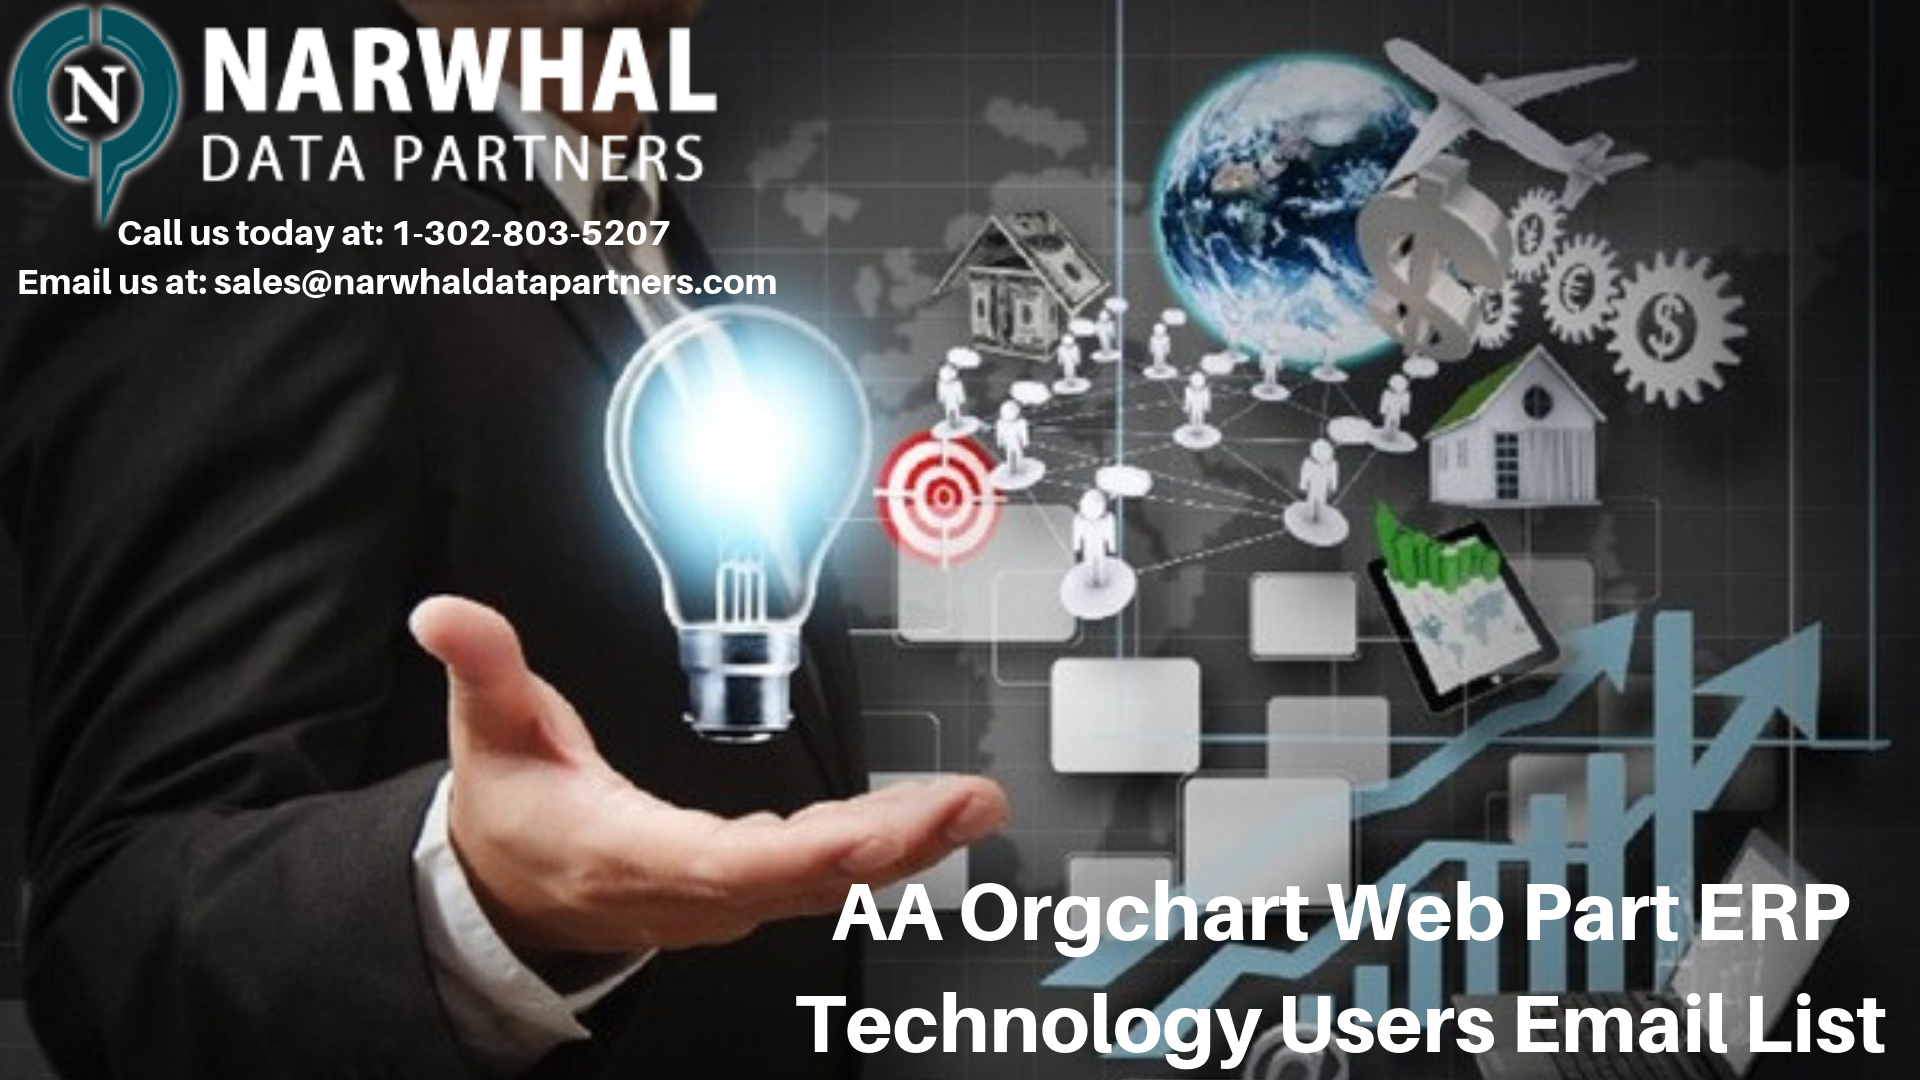 http://narwhaldatapartners.com/aa-orgchart-web-part-erp-technology-users-email-list.html